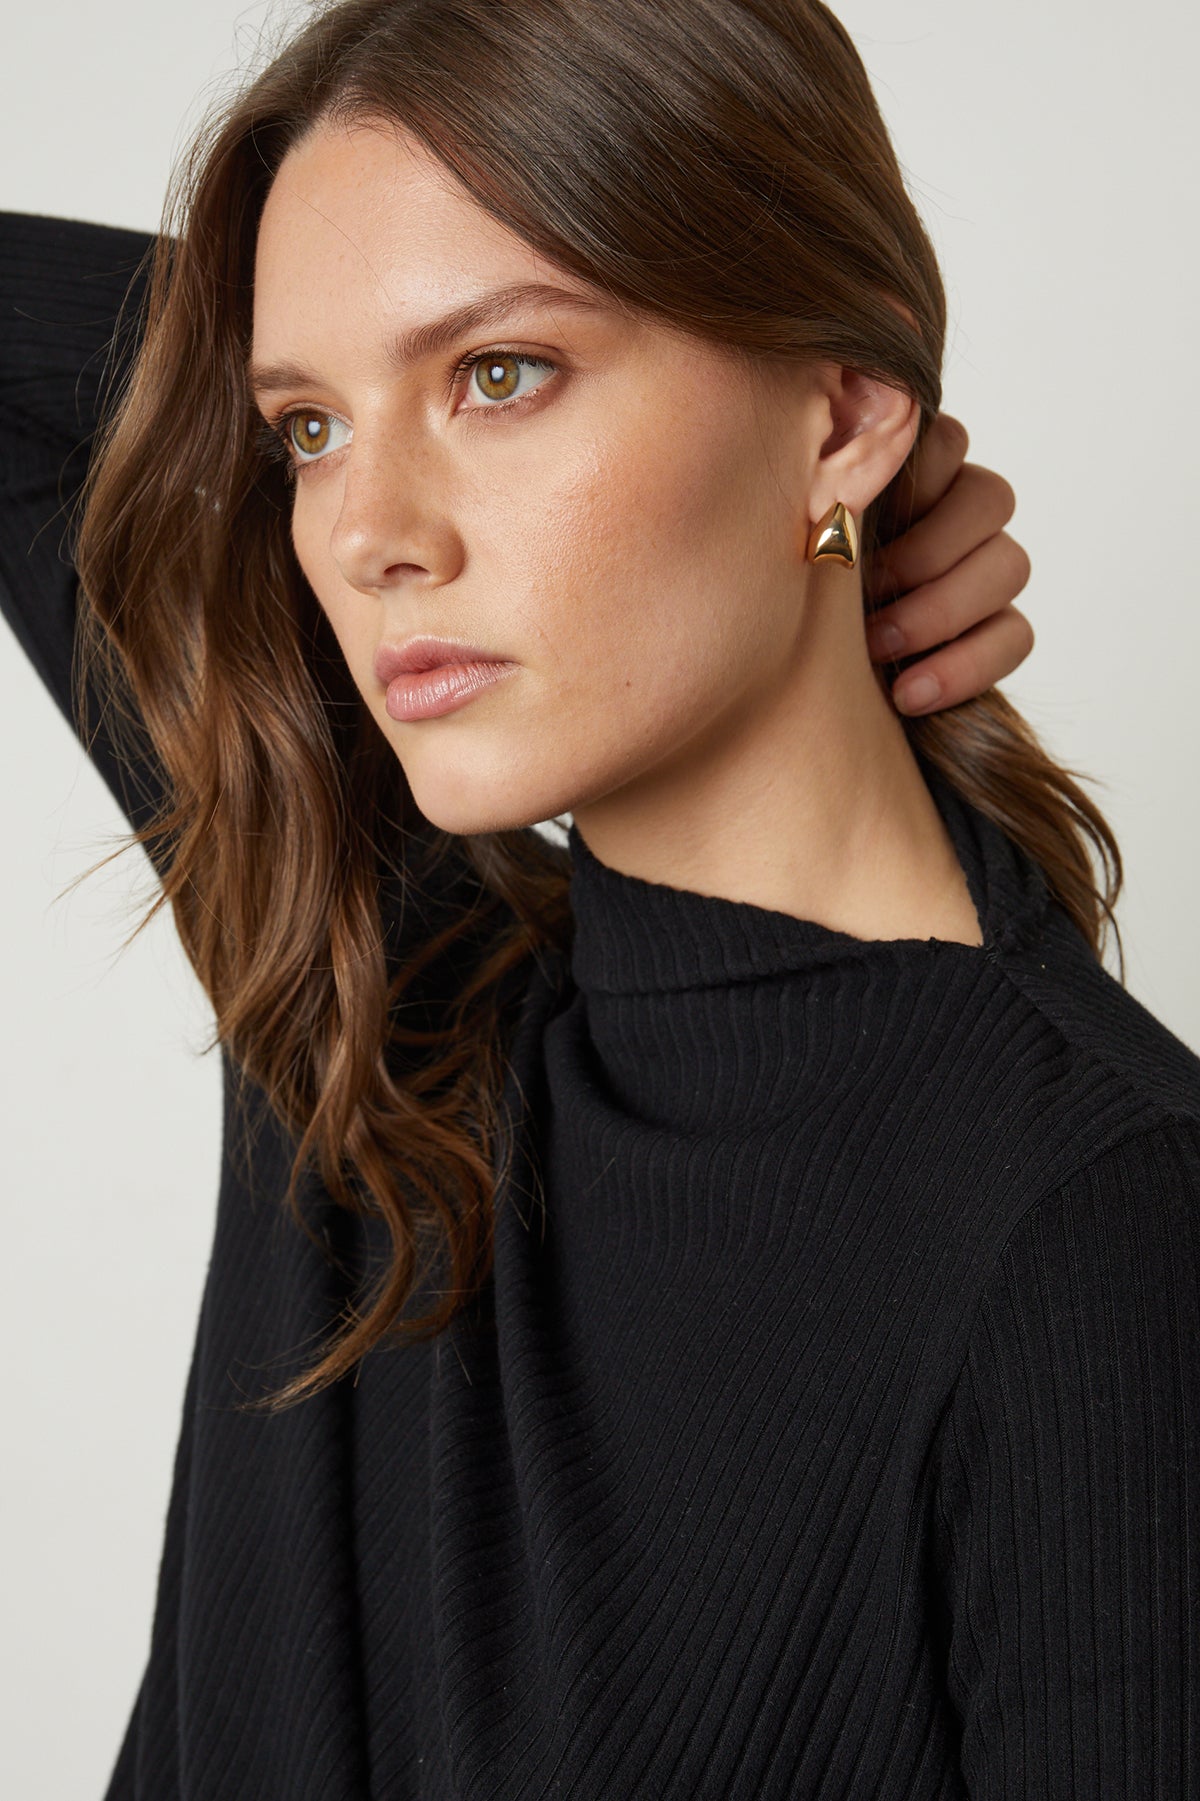   The model is wearing a Velvet by Graham & Spencer DEANNA MOCK NECK TOP and earrings. 